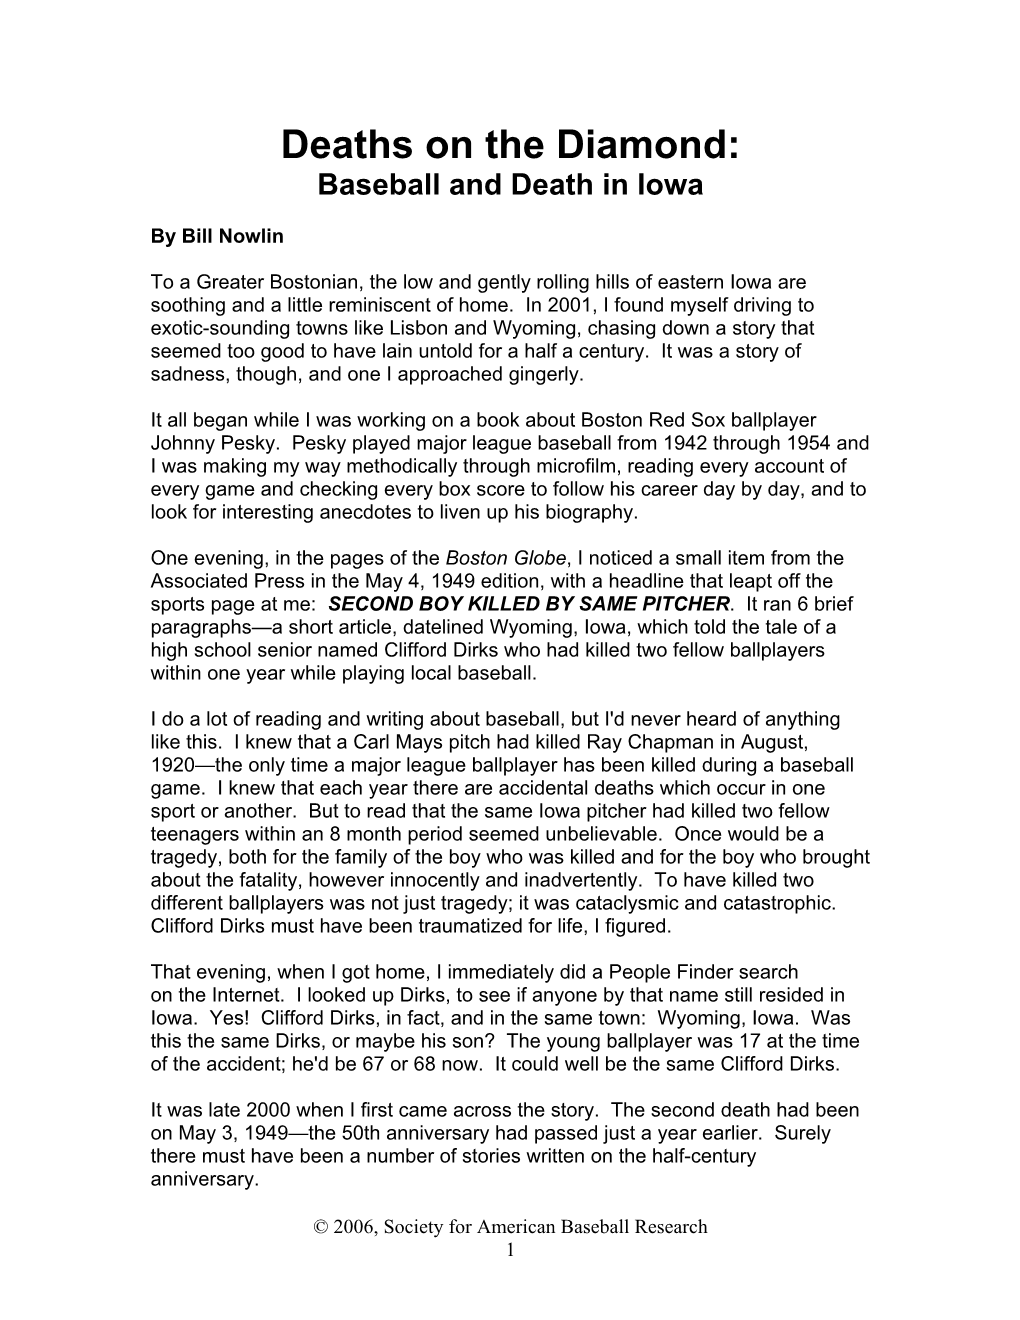 Deaths on the Diamond, Or Baseball & Death in Iowa